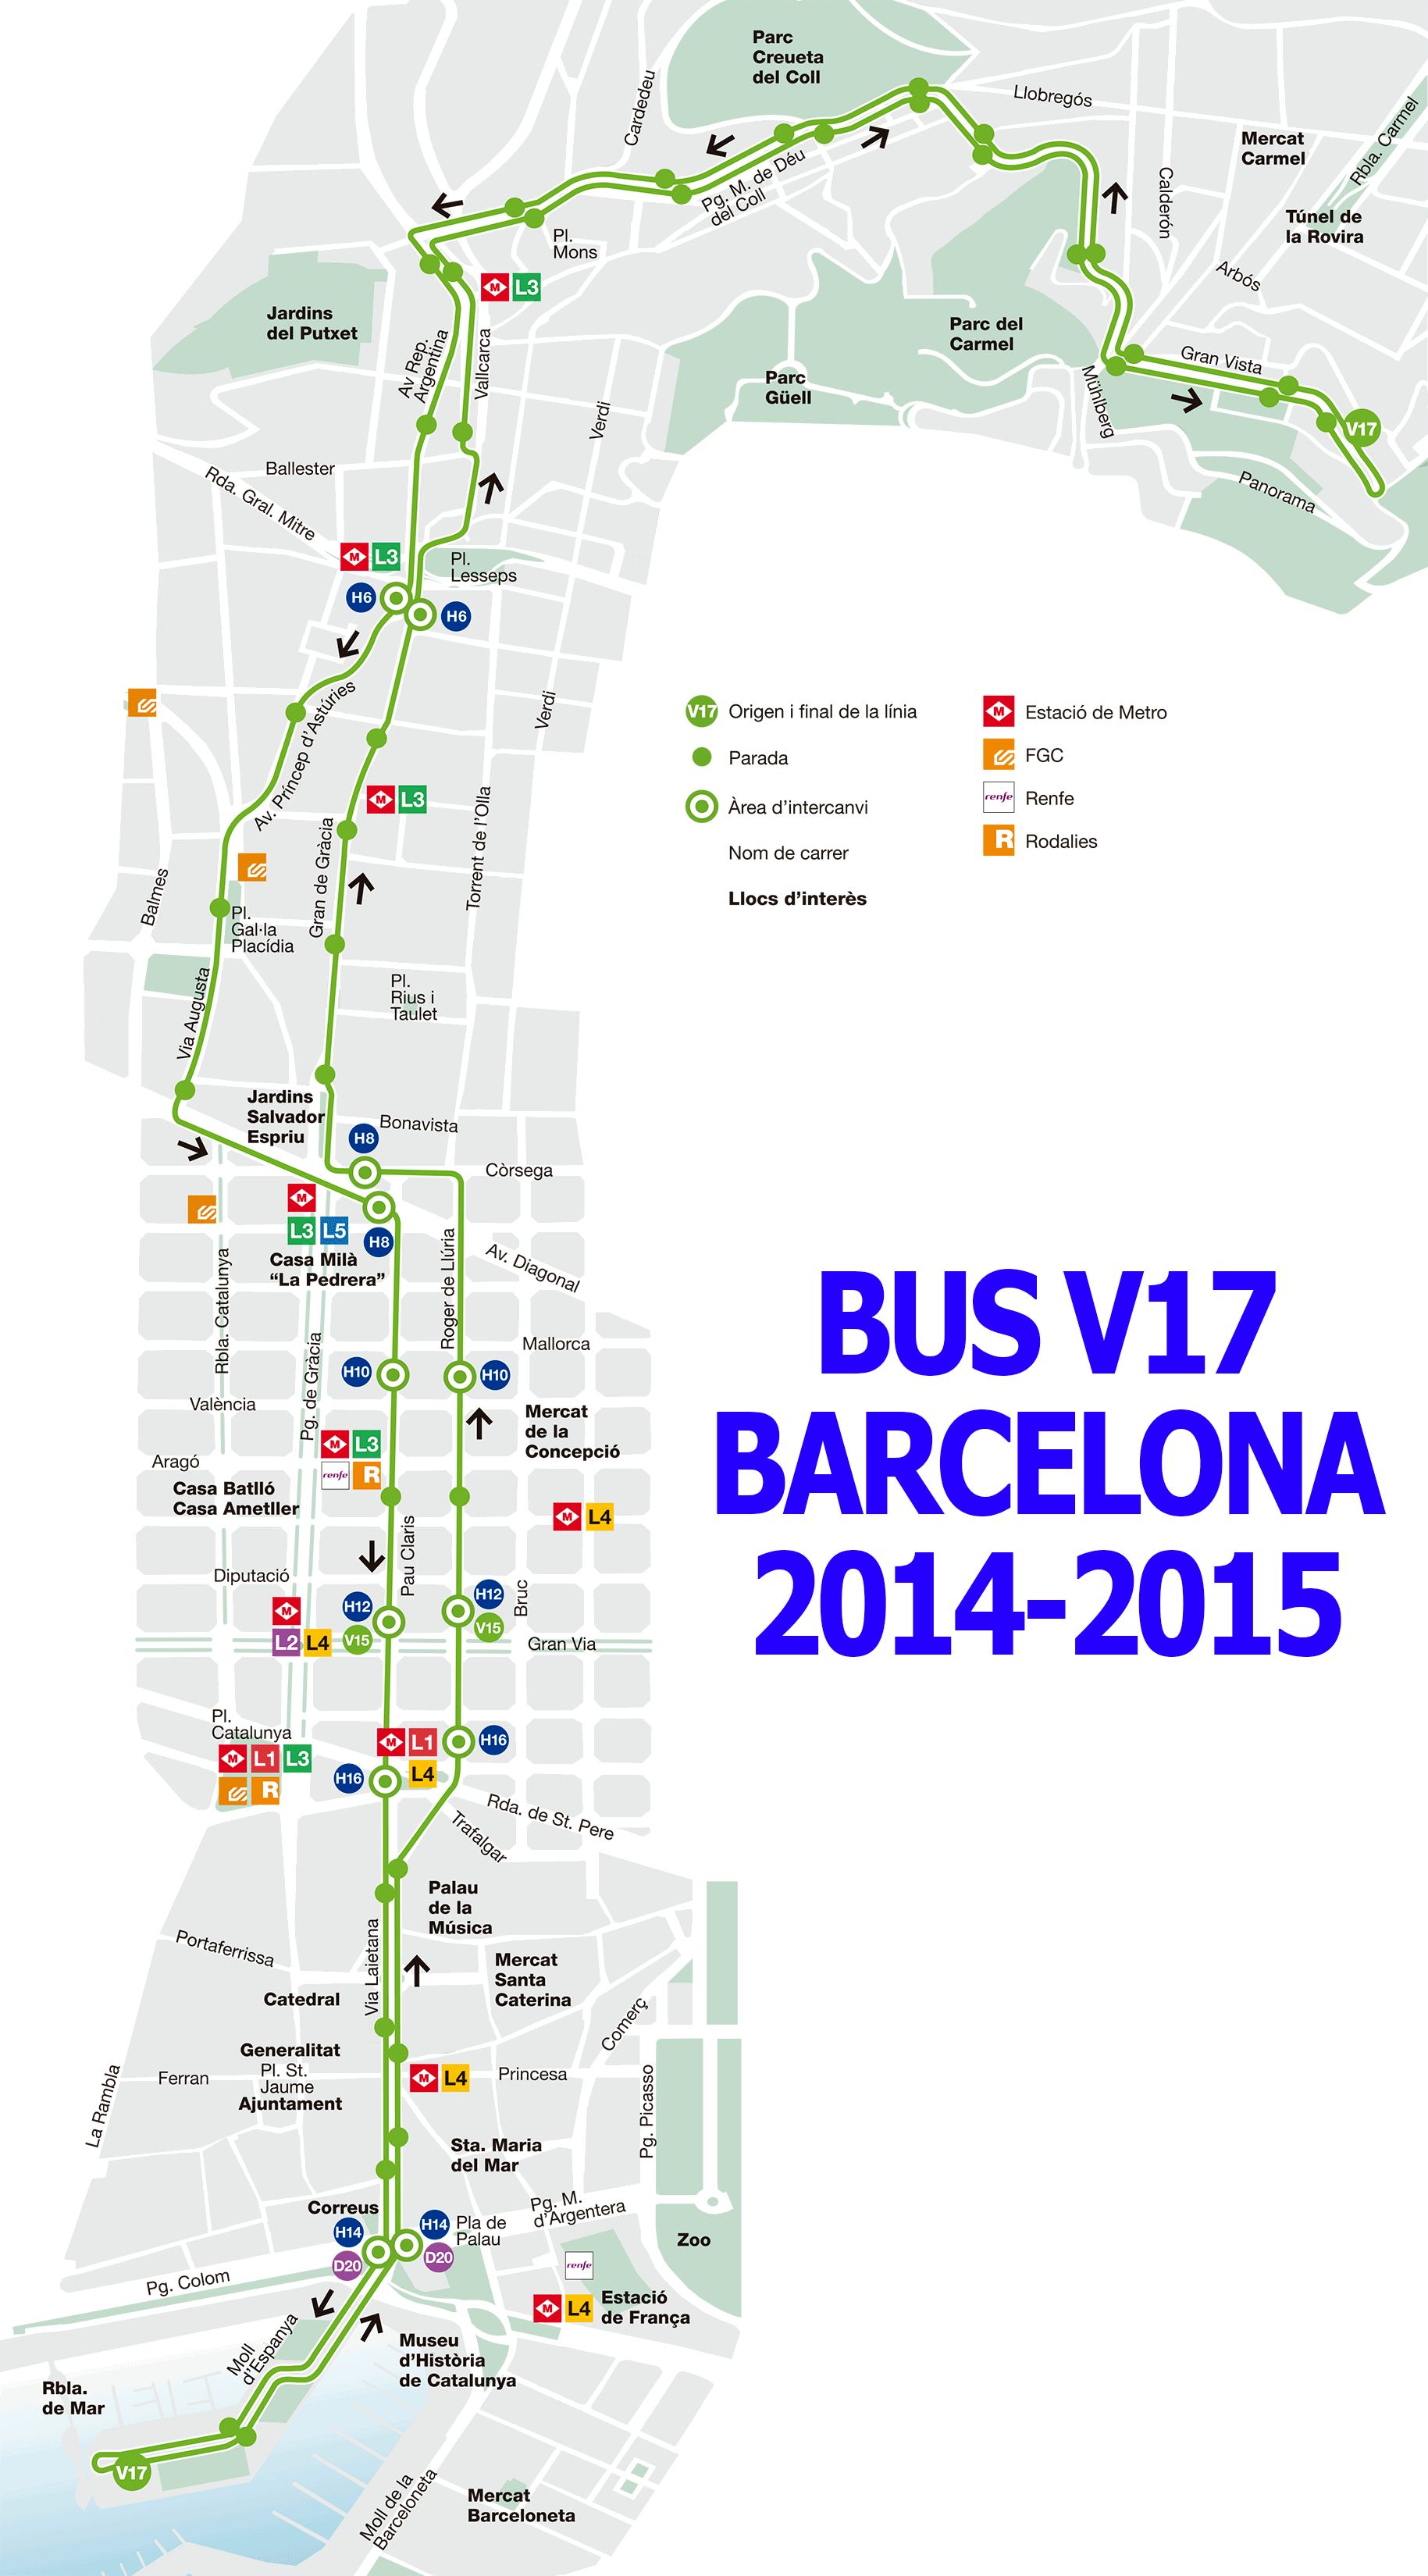 Barcelona bus map line V17 2014